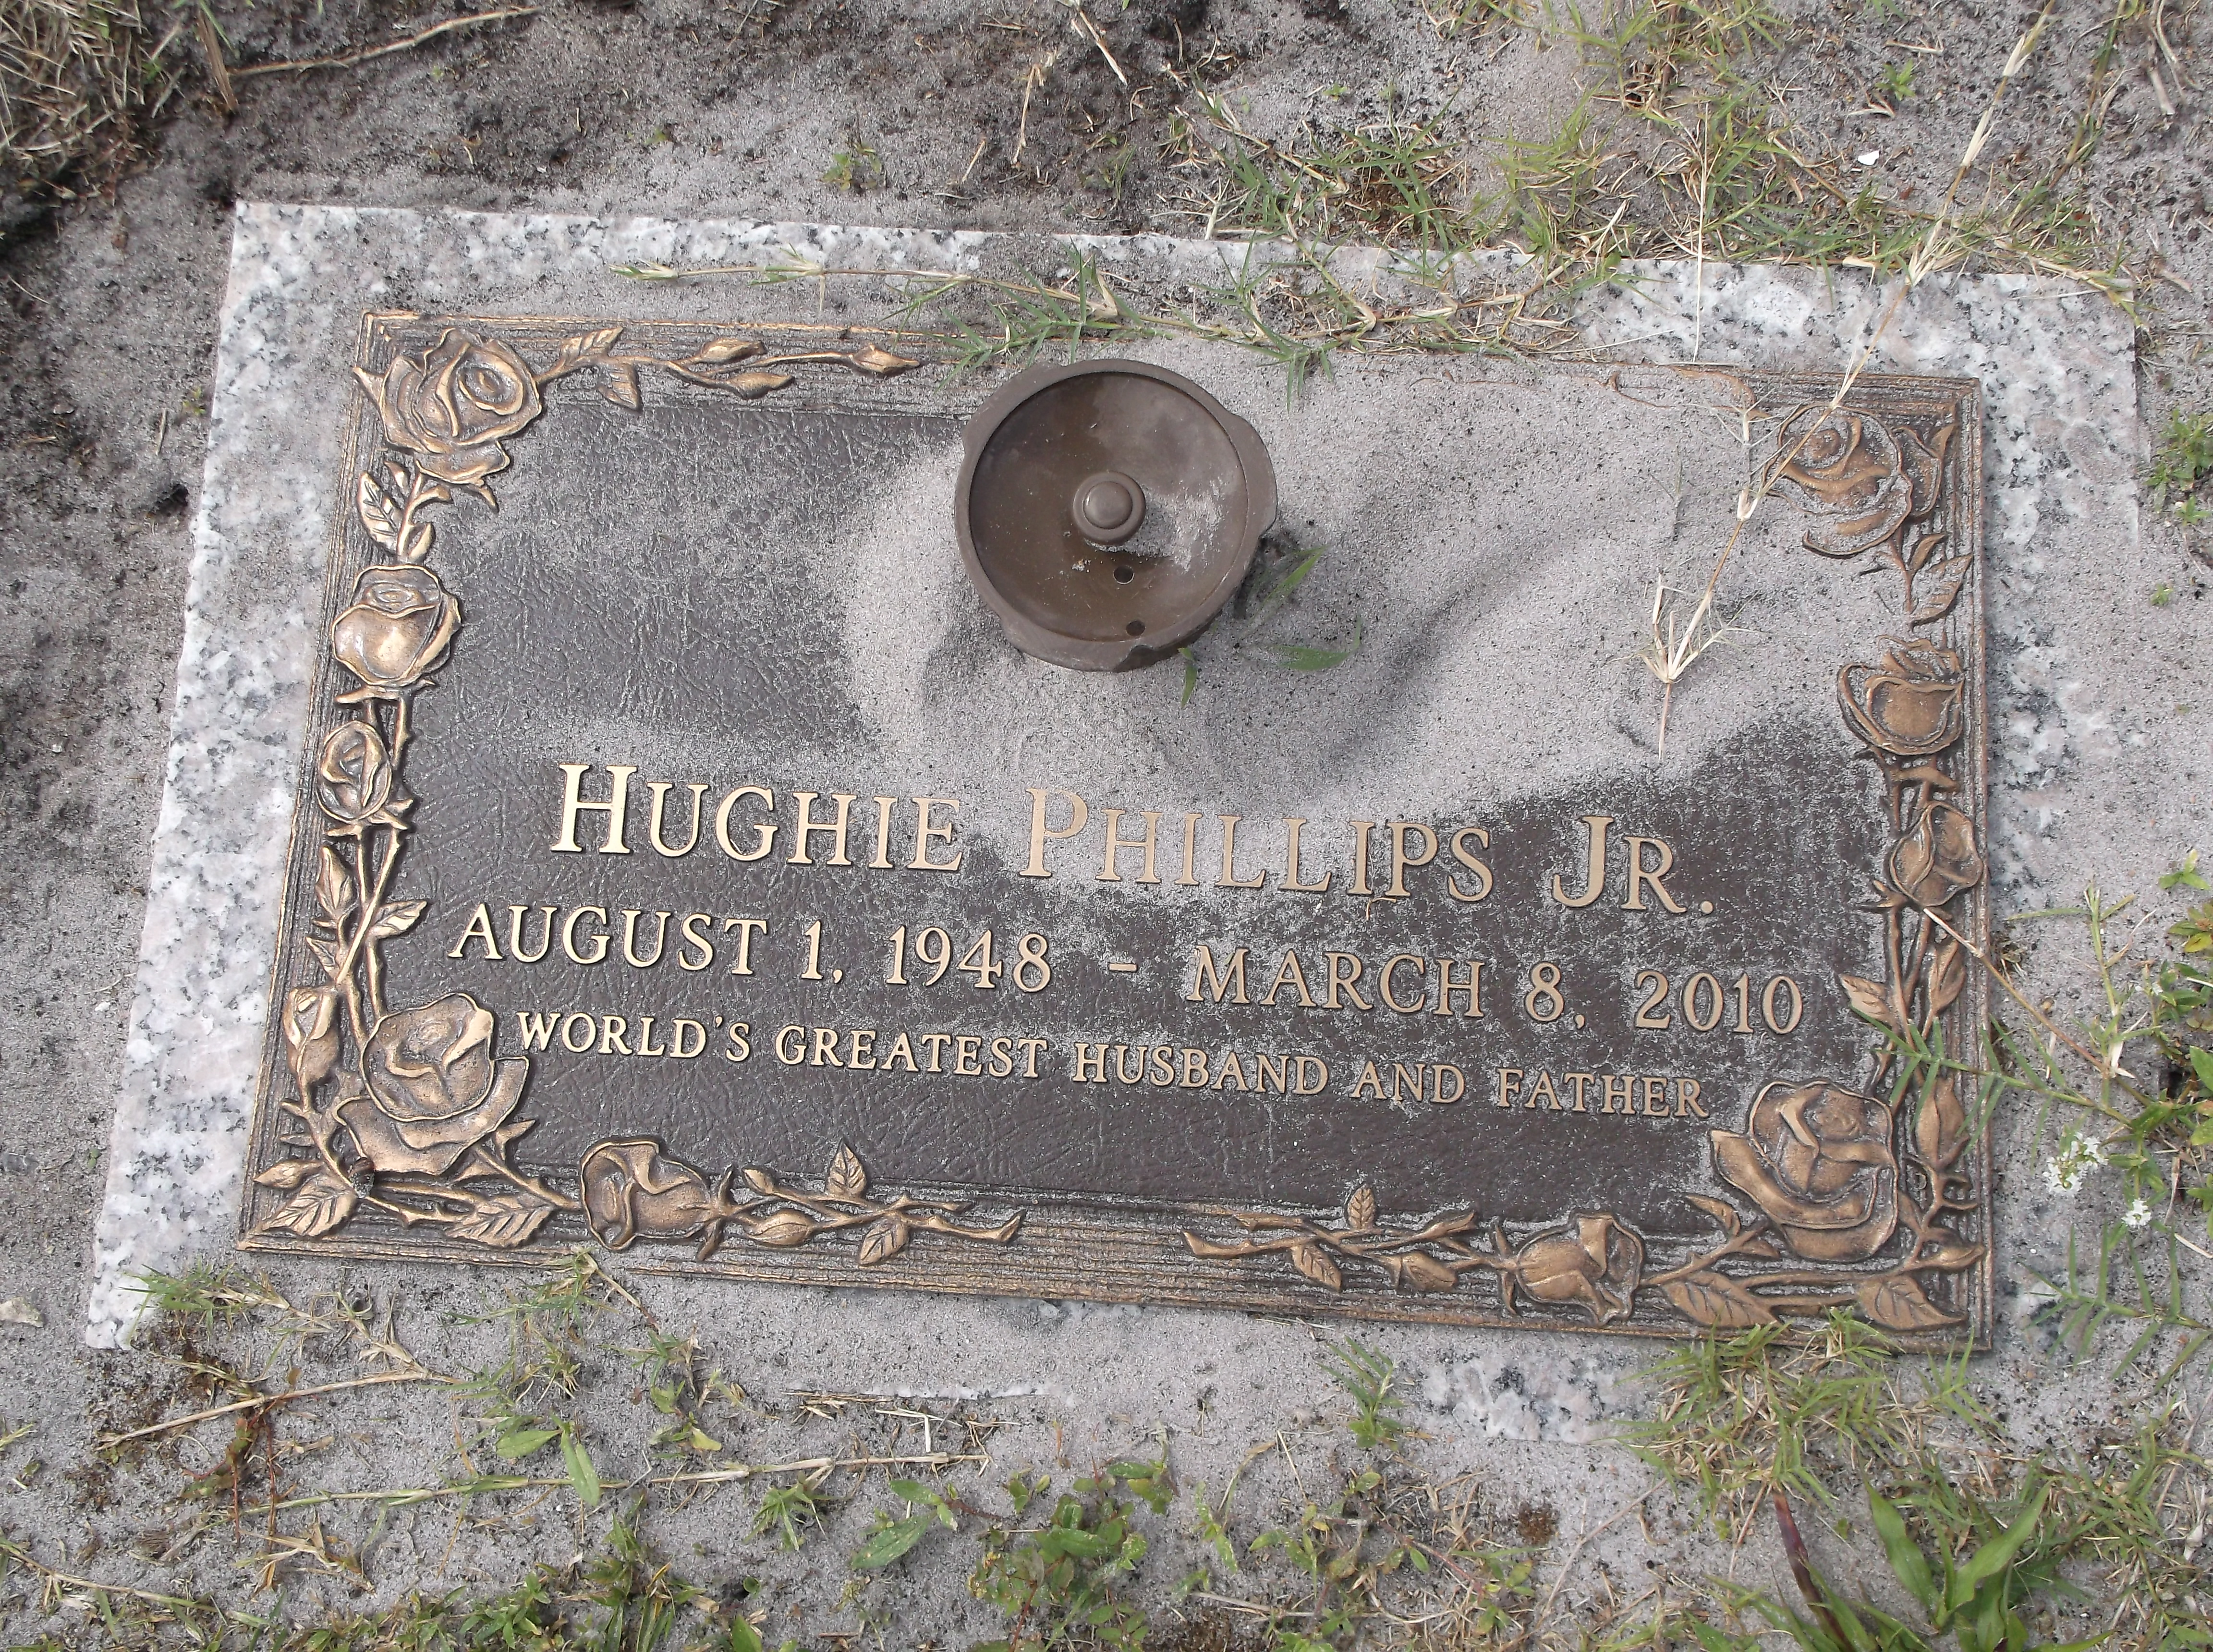 Hughie Phillips, Jr